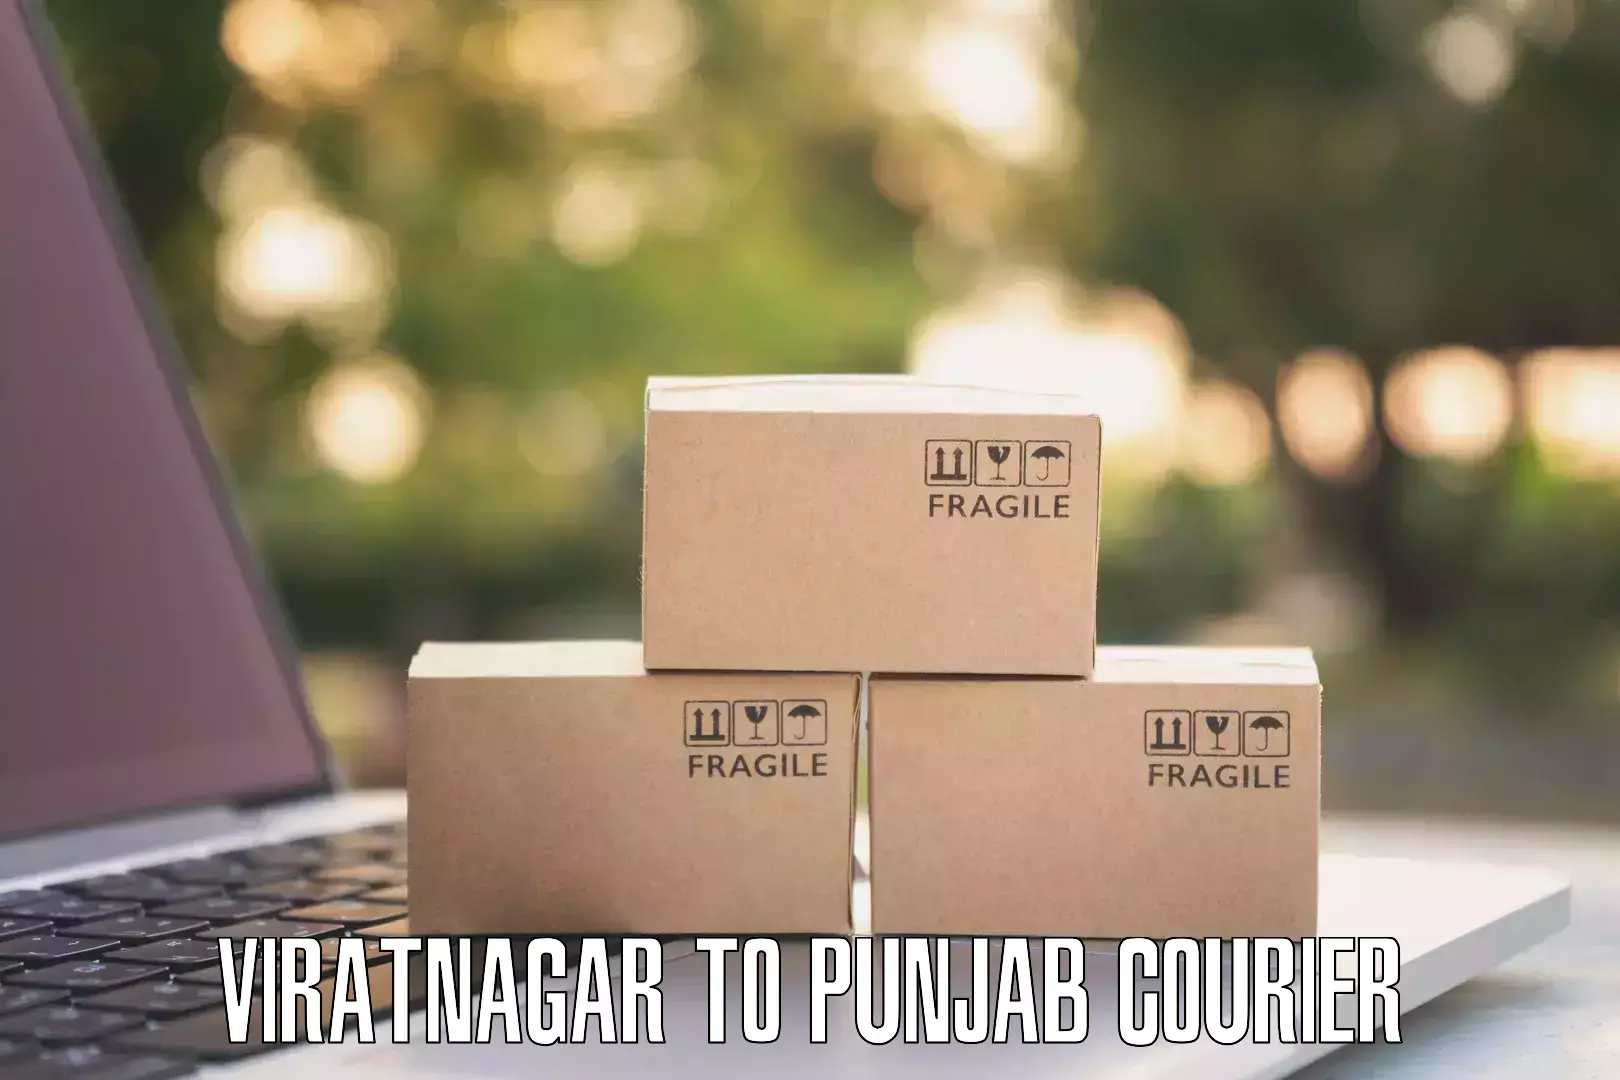 Advanced shipping network Viratnagar to Rajpura